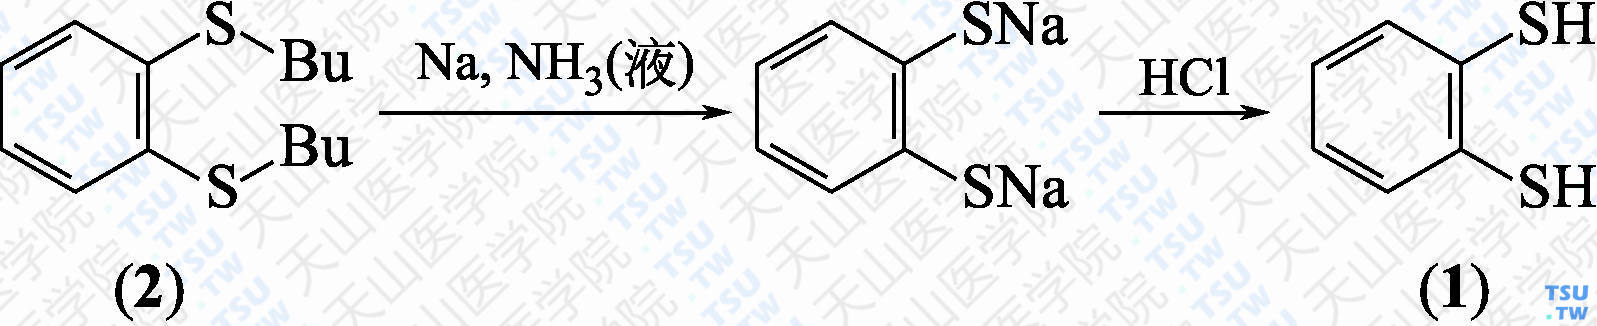 邻苯二硫酚（分子式：C<sub>6</sub>H<sub>6</sub>S<sub>2</sub>）的合成方法路线及其结构式